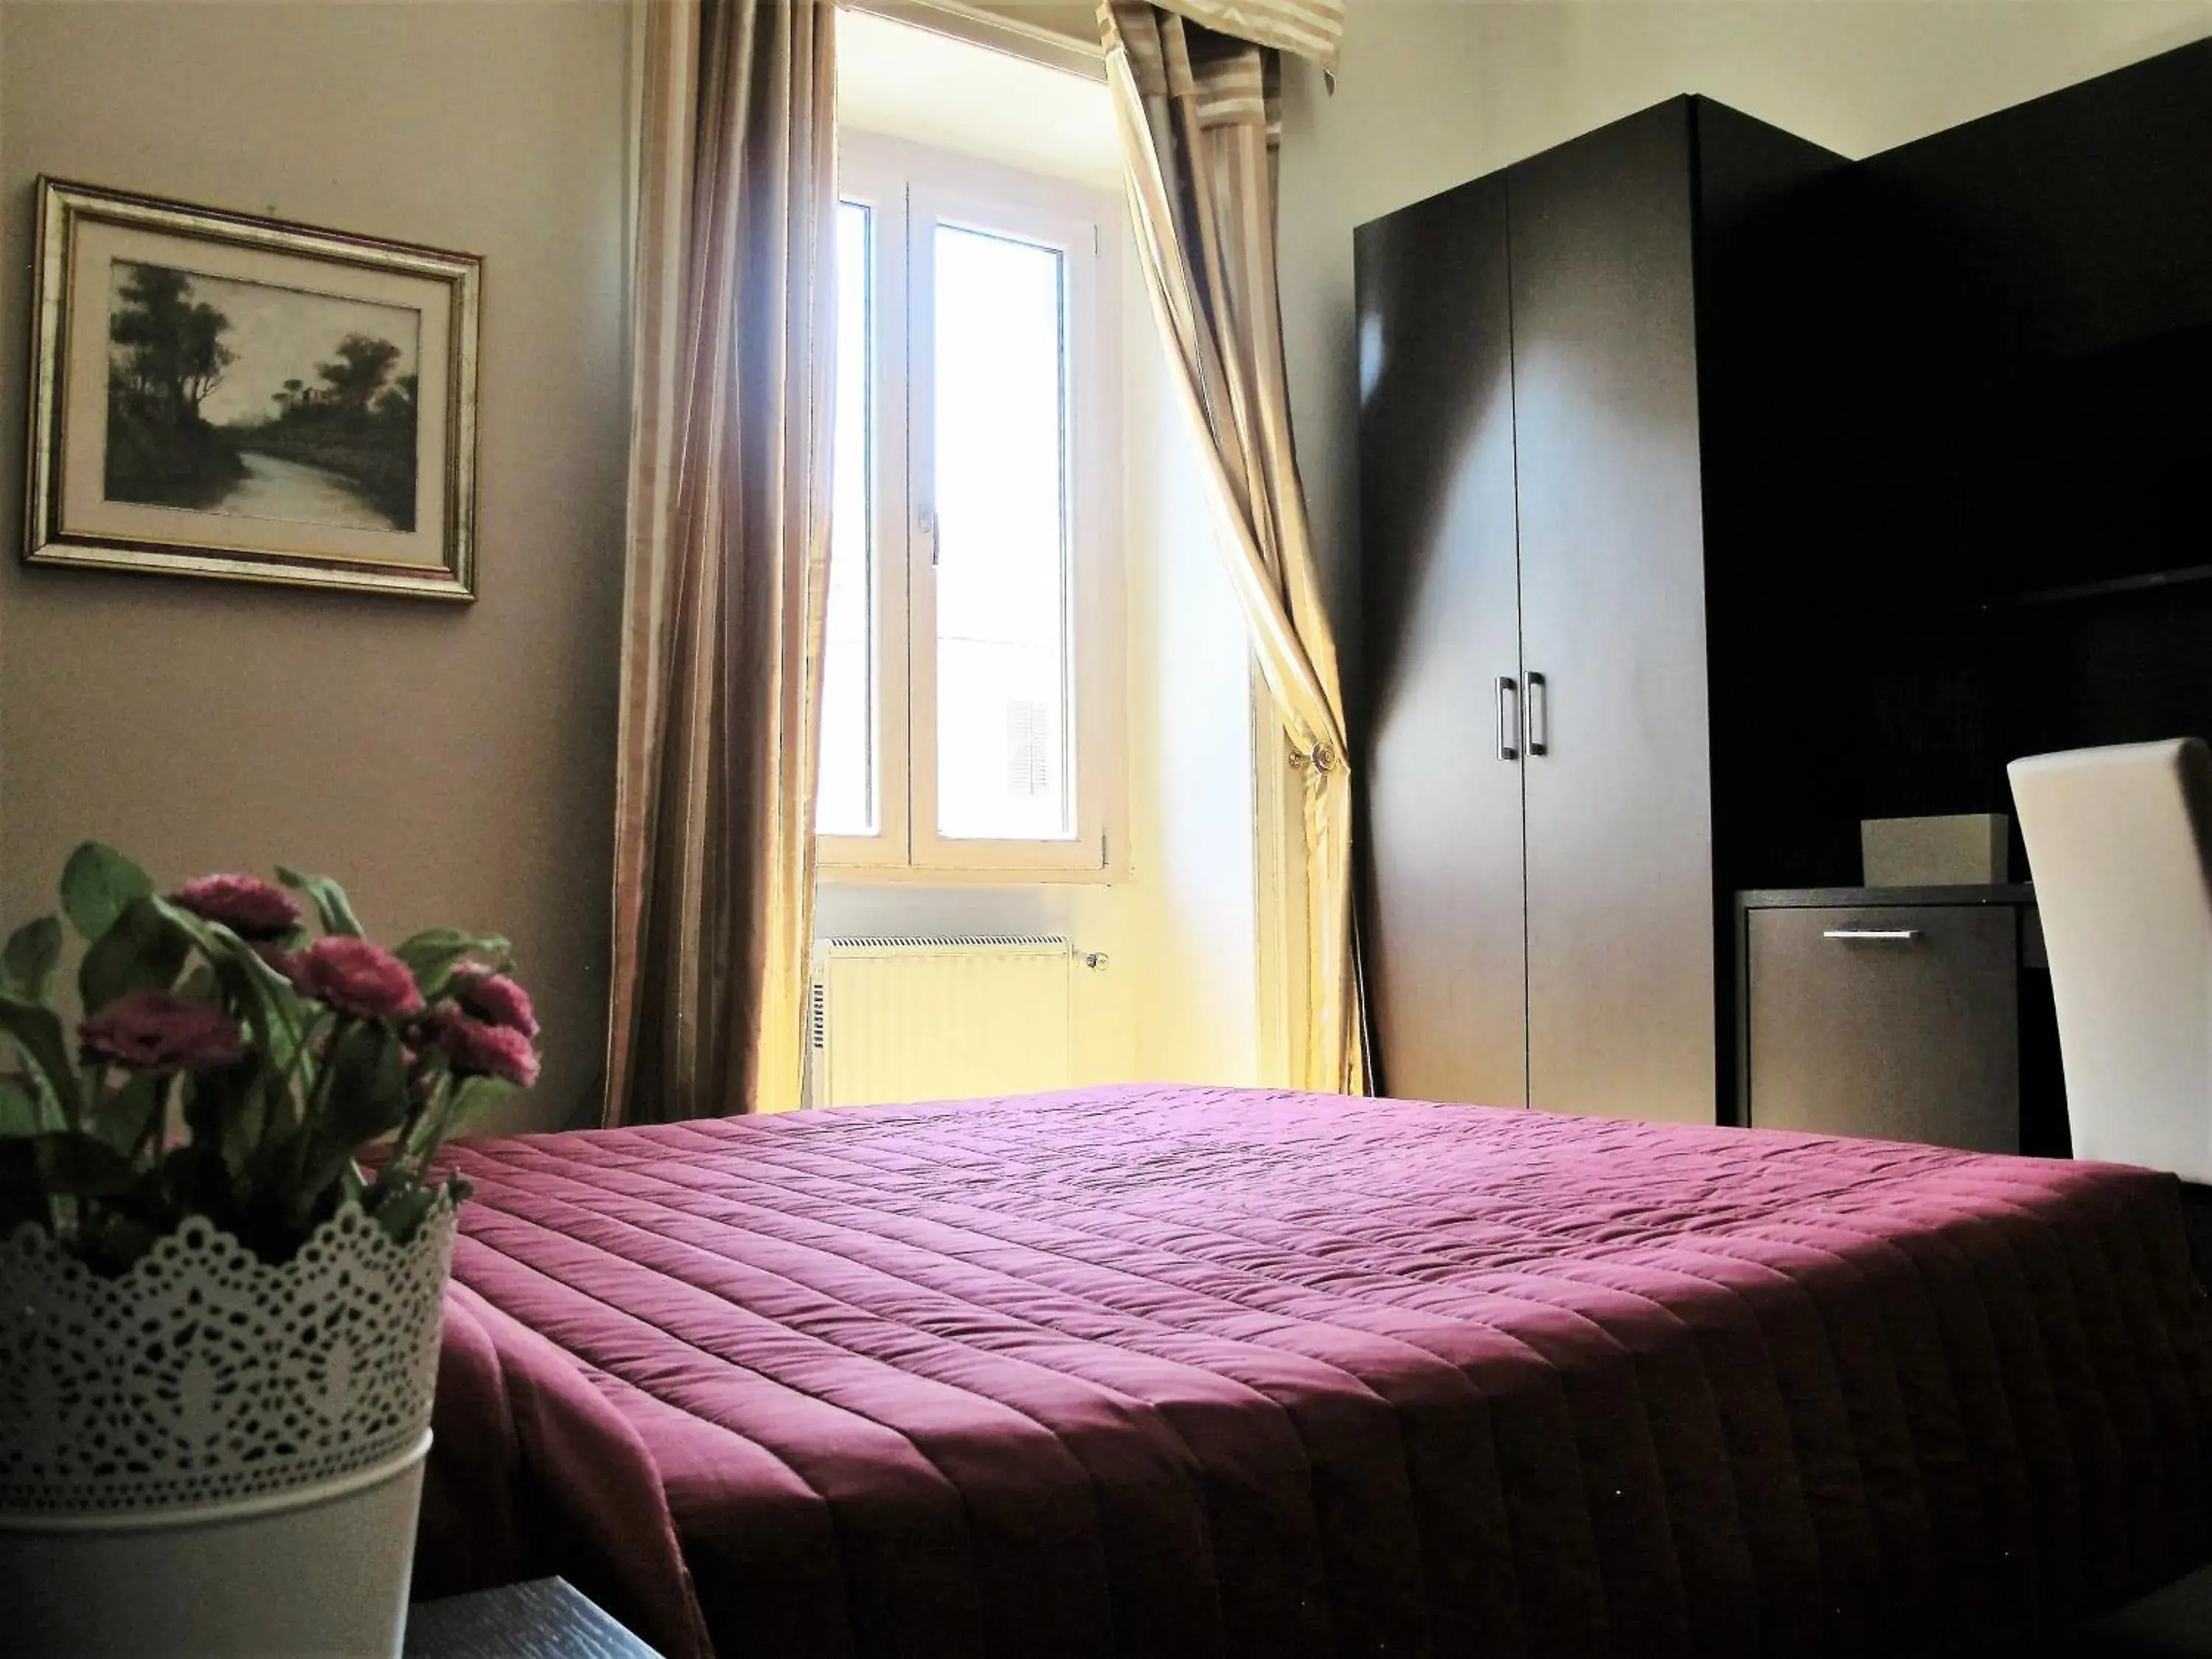 Bed, Room Photo in Hotel d'Este